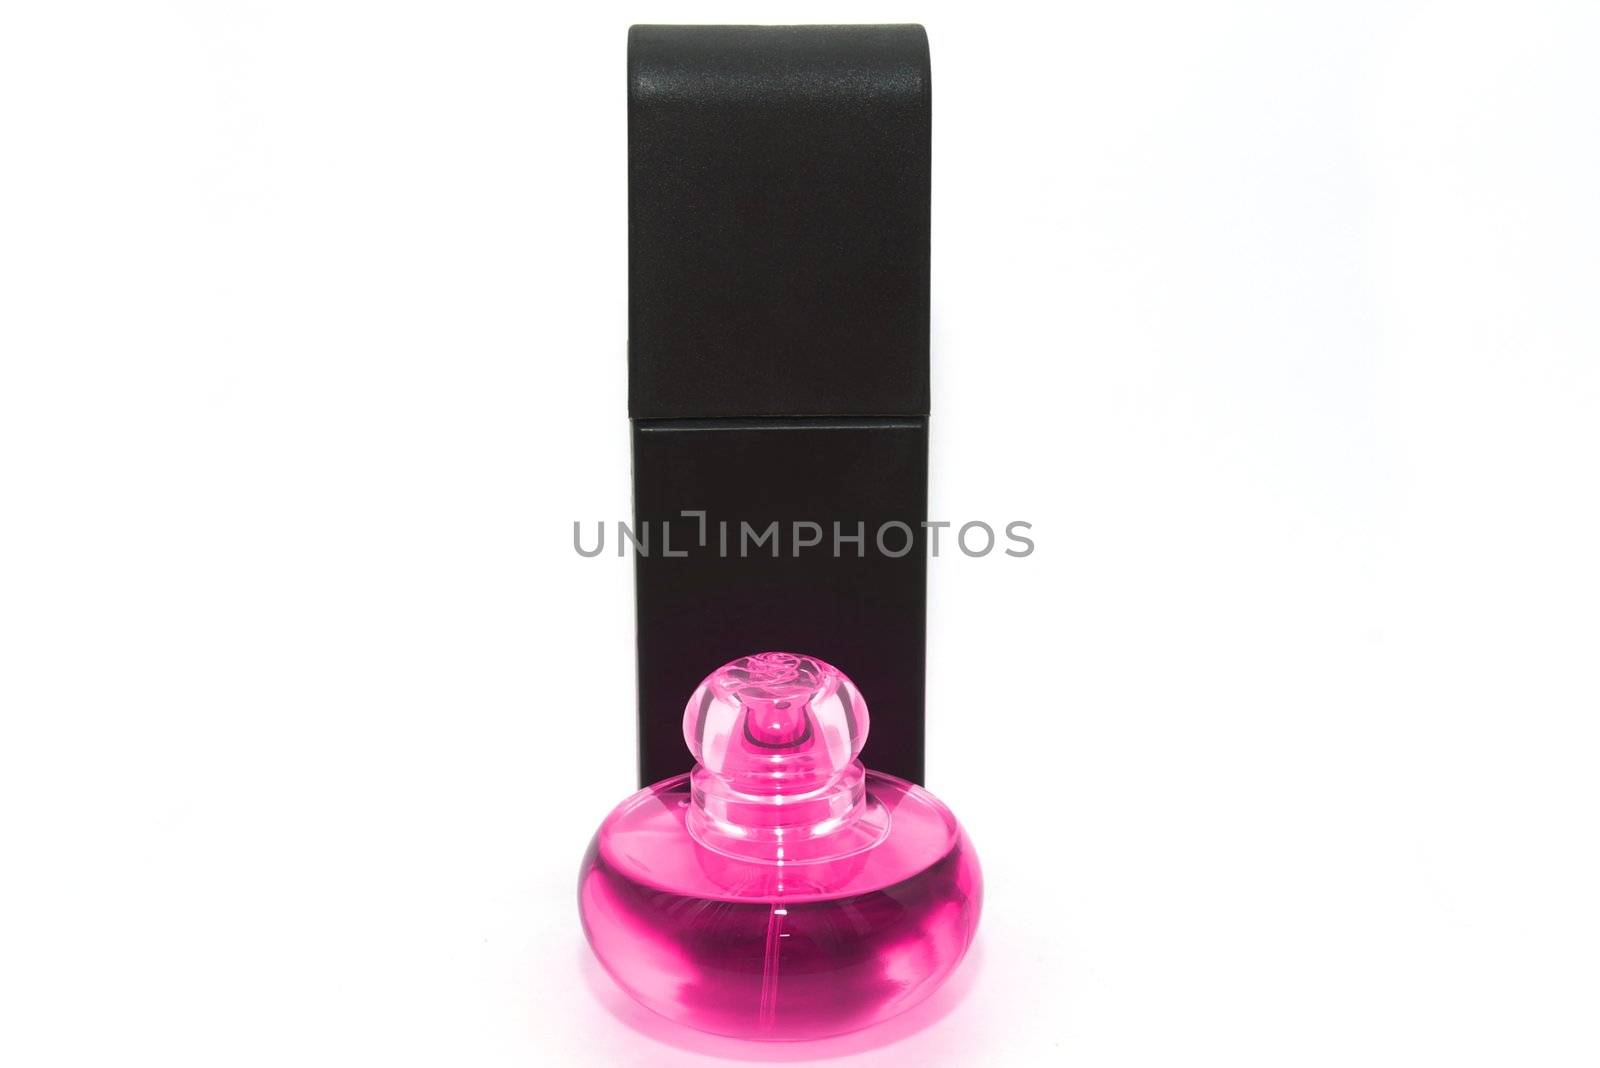 photo of the perfume set on white background